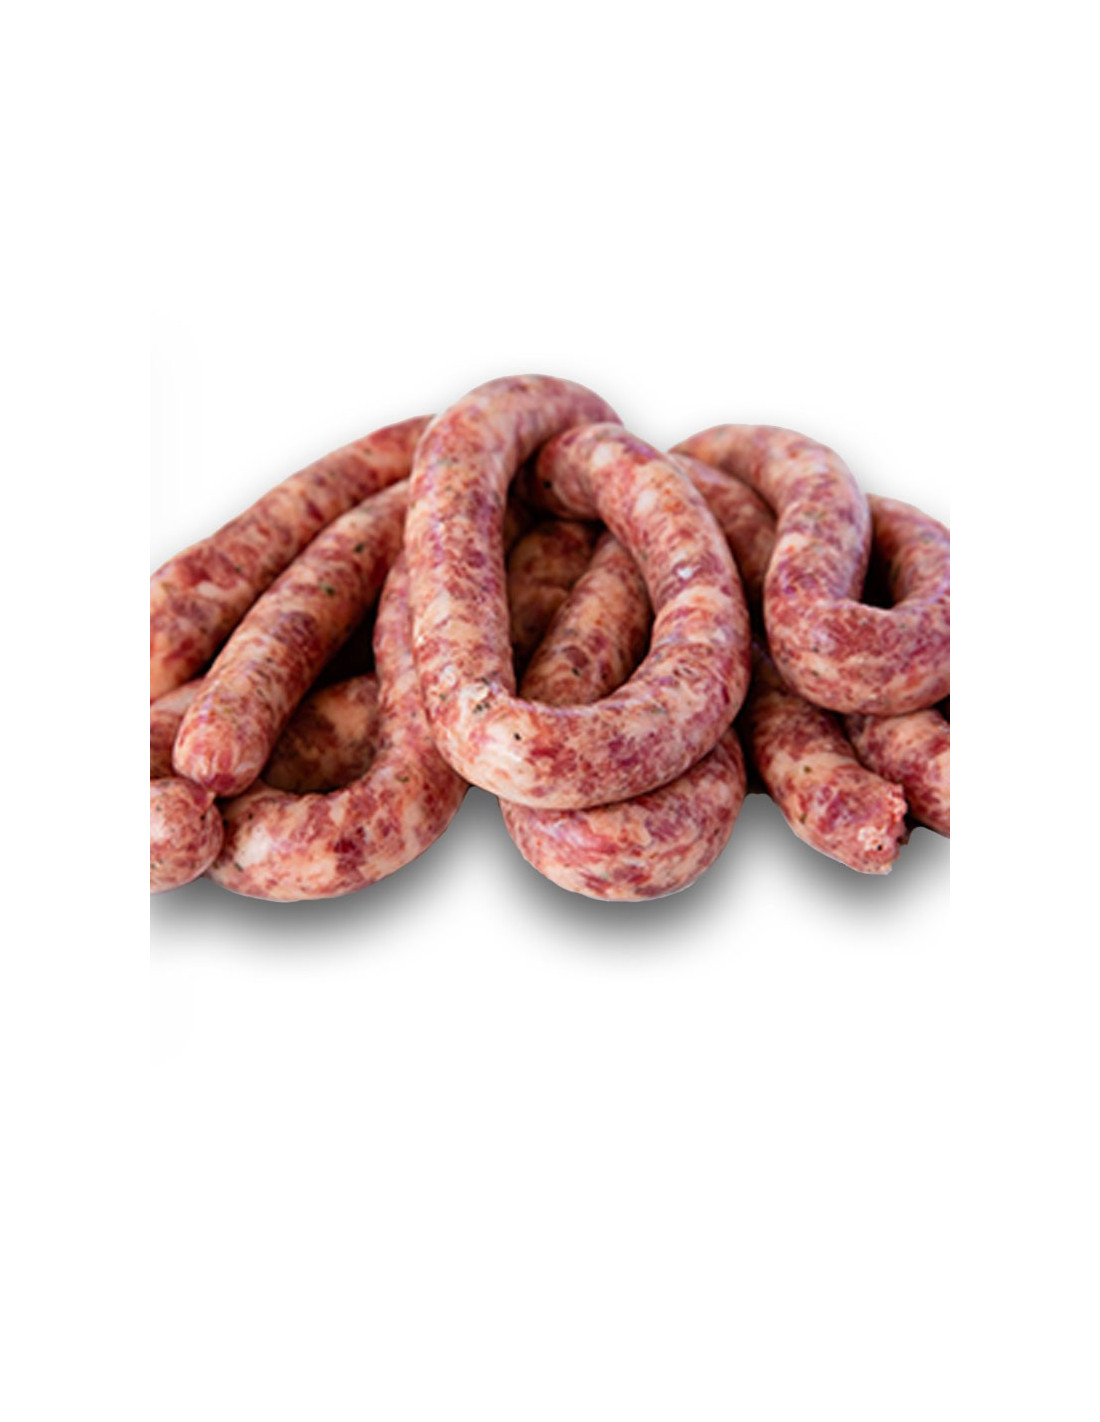 Buy Salchicha Sausage, from Parrillera 1.5kg 